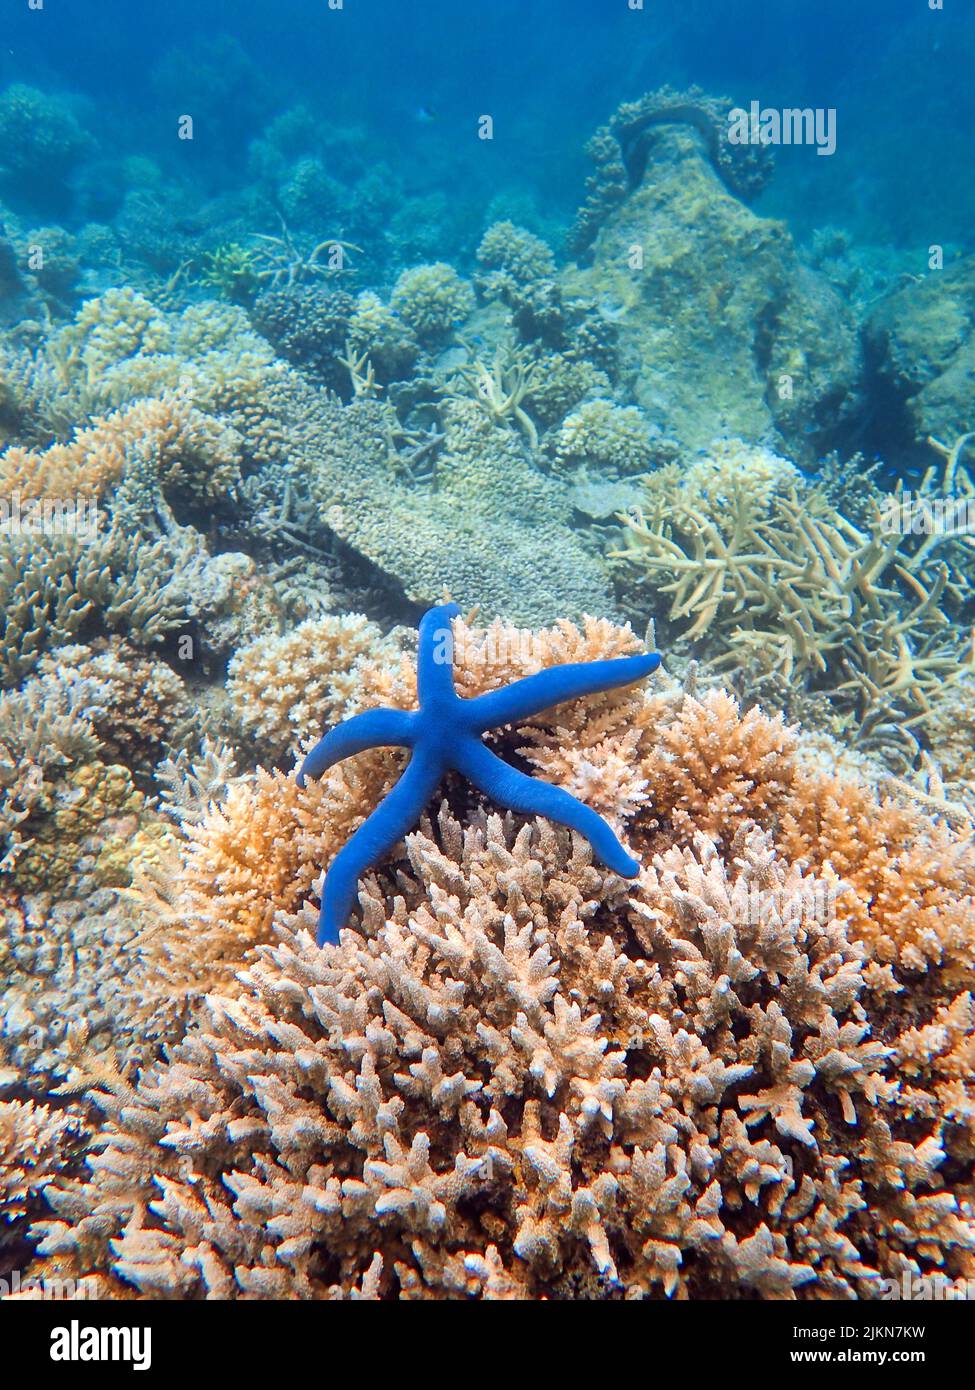 Indonesia Anambas Islands - Coral reef with Blue sea star - Linckia laevigata Stock Photo